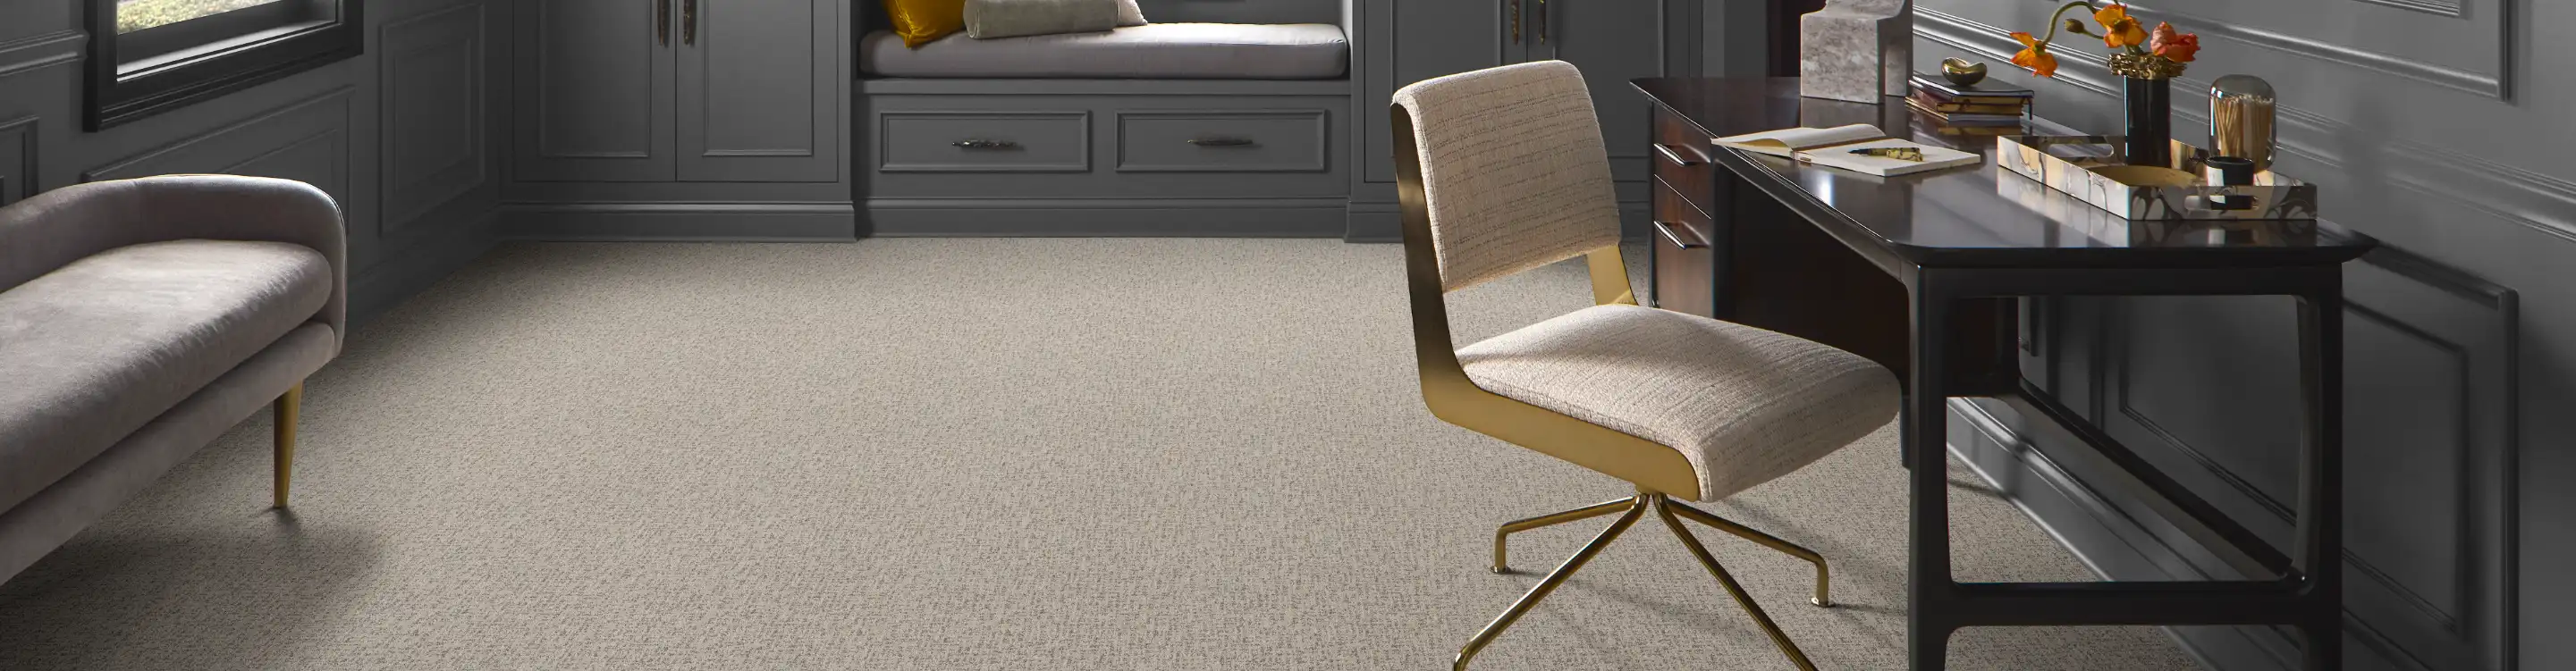 Beige carpet in a moody study